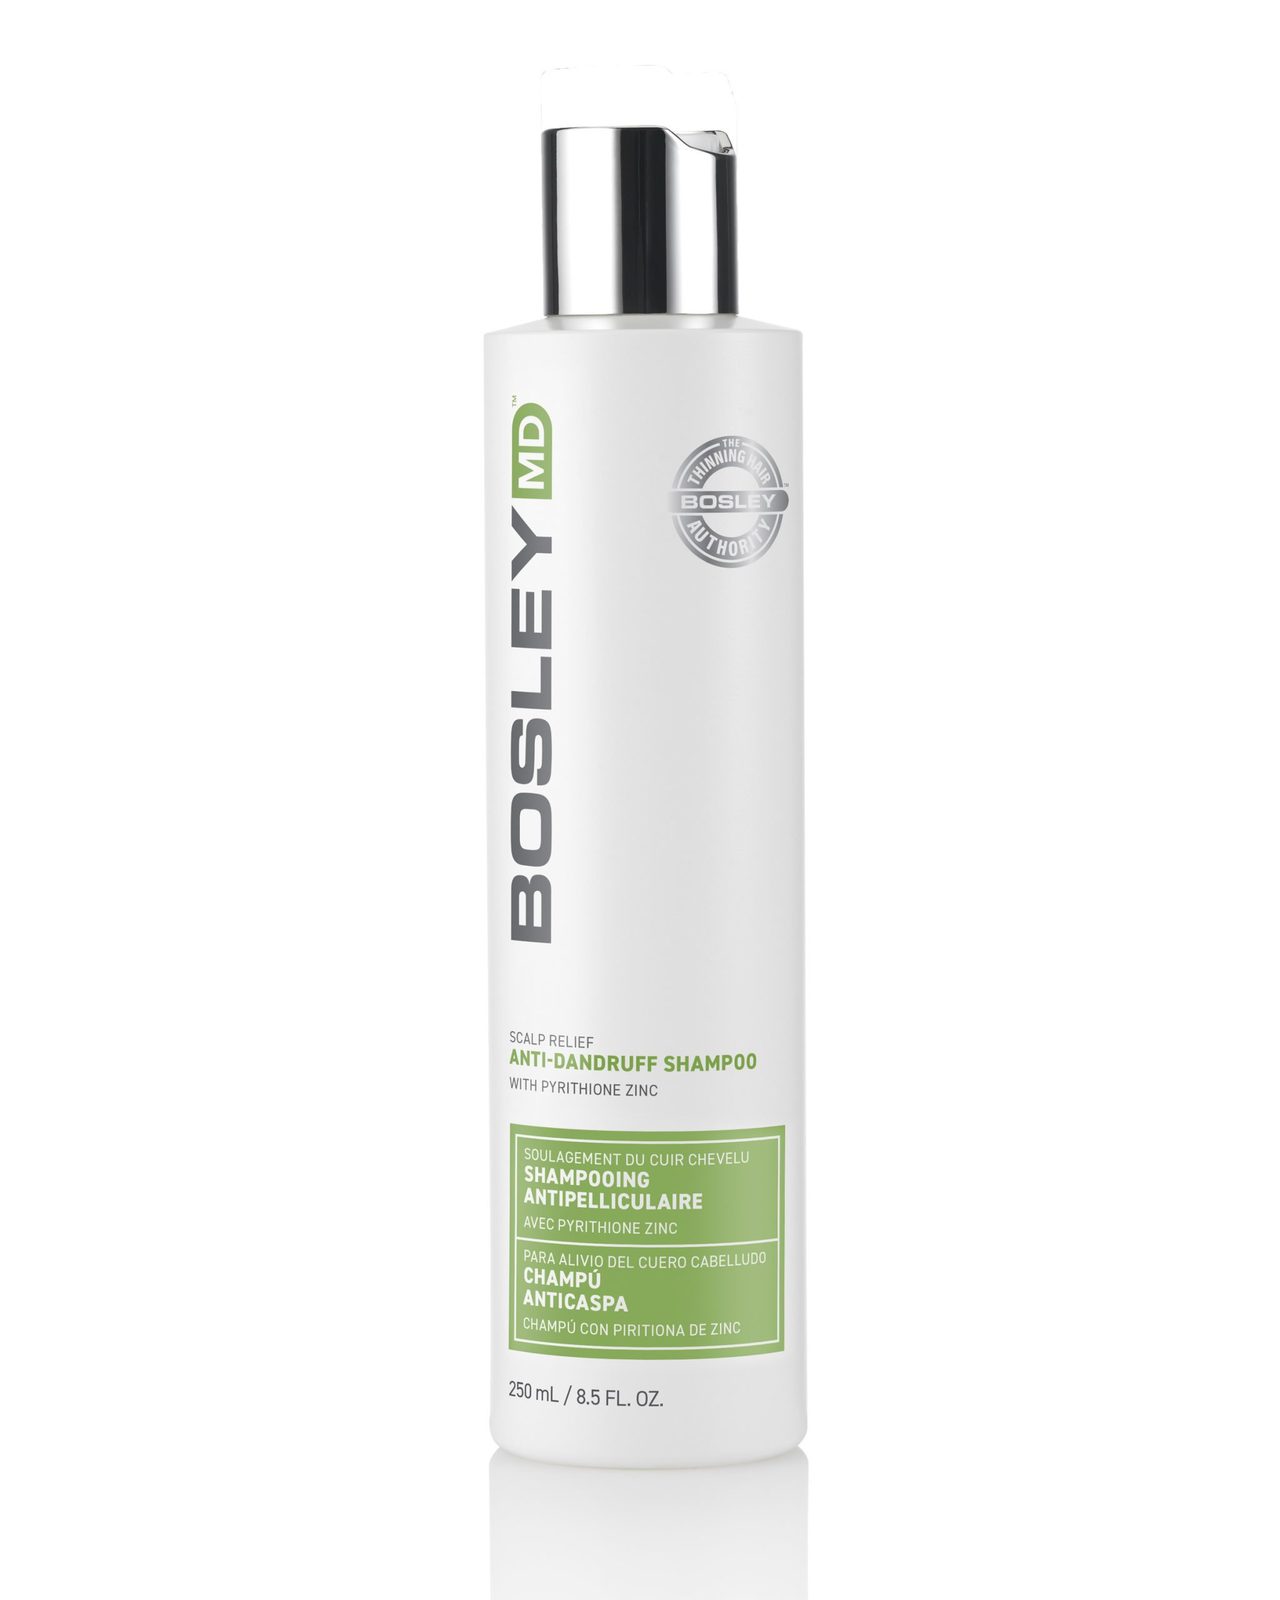 BosleyMD Scalp Relief Anti Dandruff Shampoo 8.5oz - $39.00